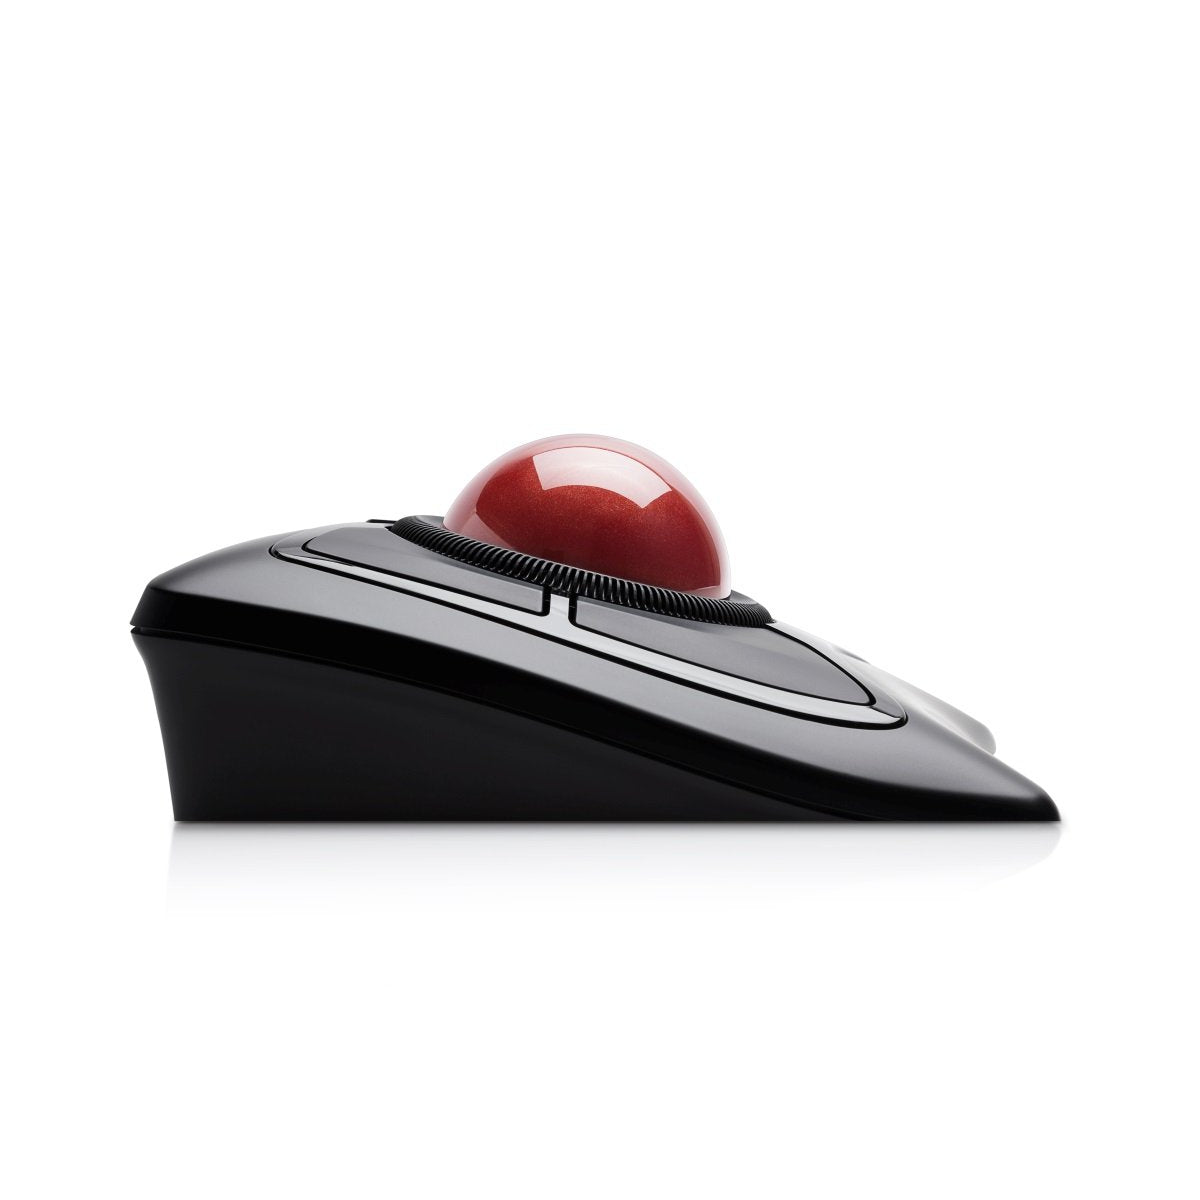 Expert Mouse Wireless Trackball